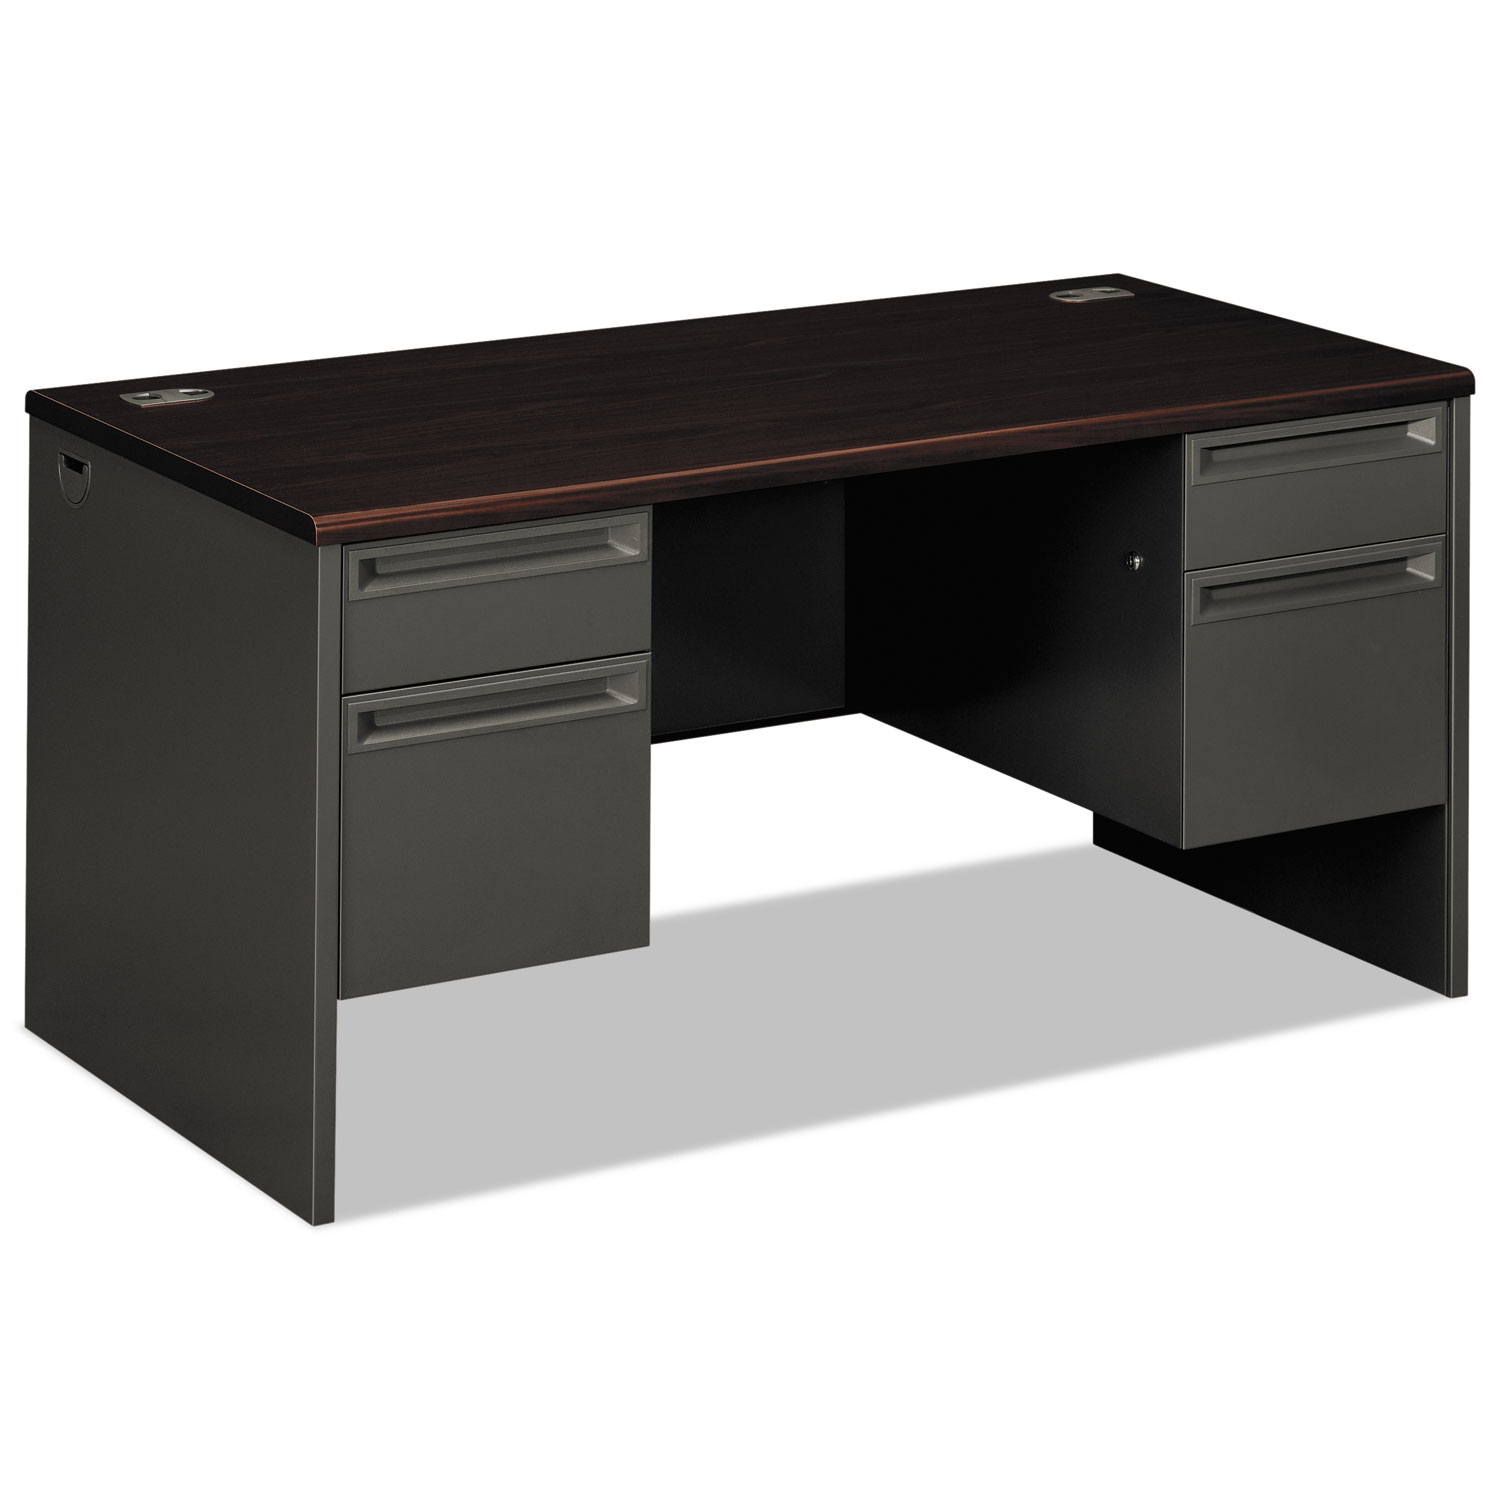  HON H38155.N.S 38000 Series Double Pedestal Desk, 60w x 30d x 29.5h, Mahogany/Charcoal (HON38155NS) 